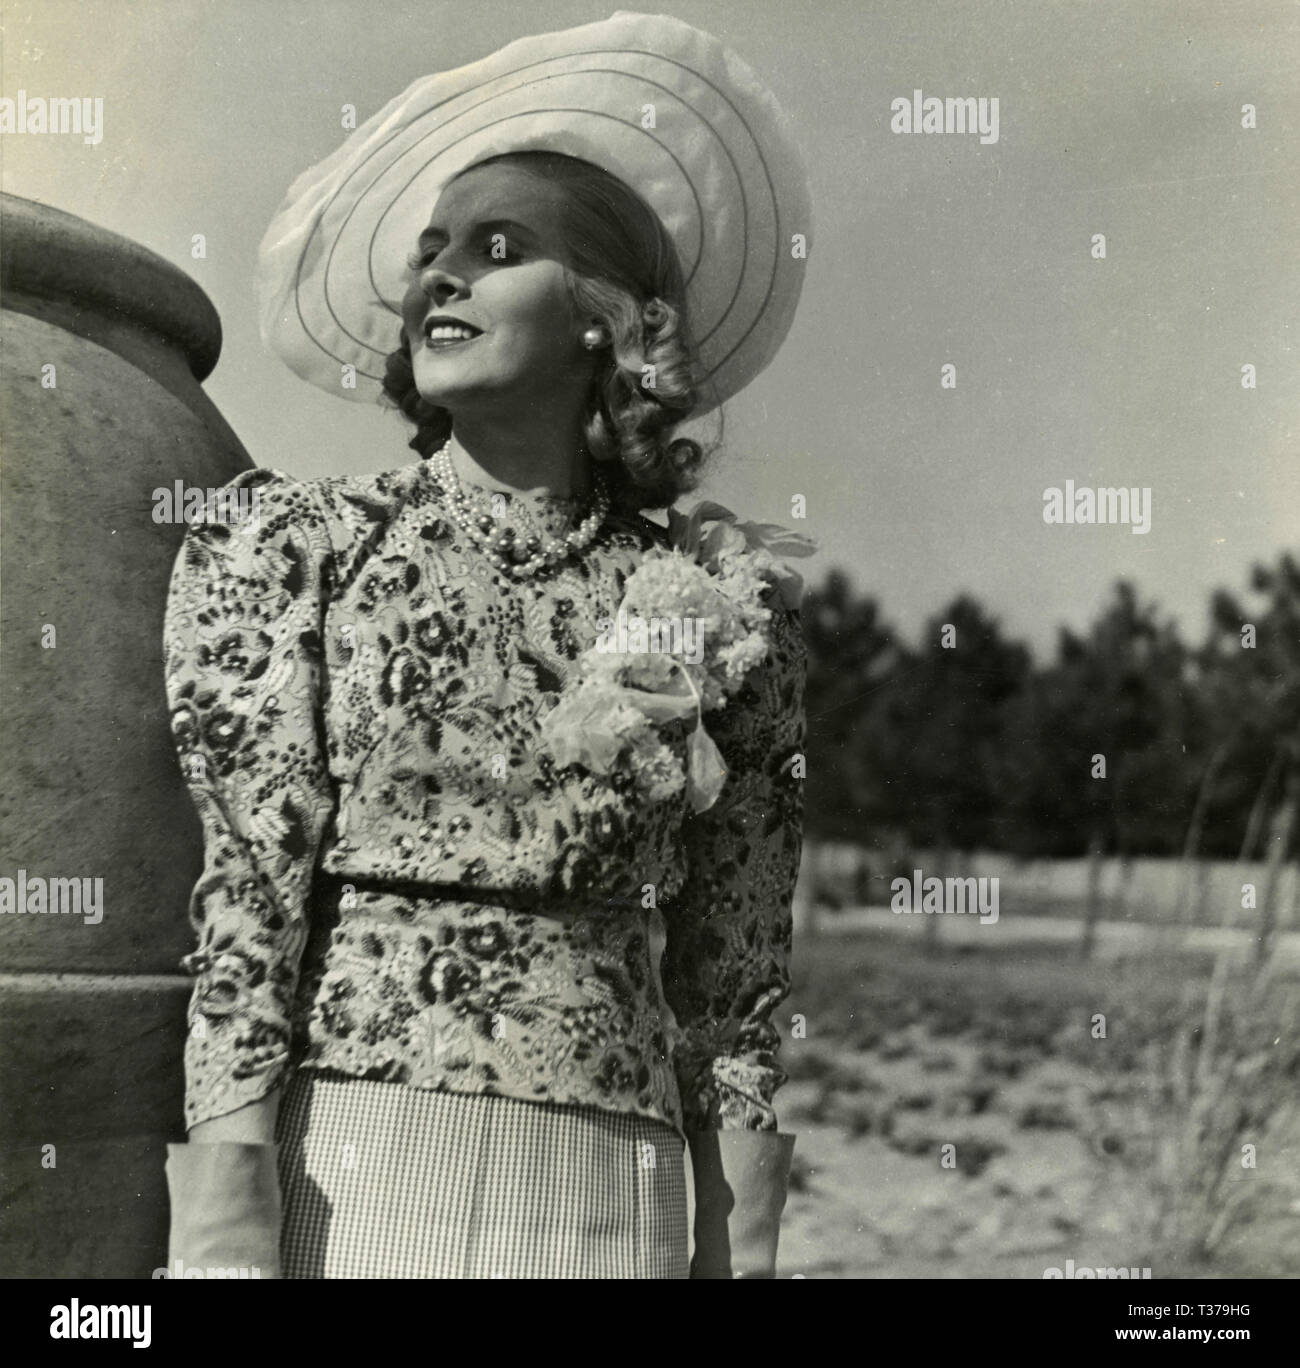 La actriz italiana Ruby Dalma en la película 'C'è sempre nu ma', Tirrenia, Italia 1942 Foto de stock